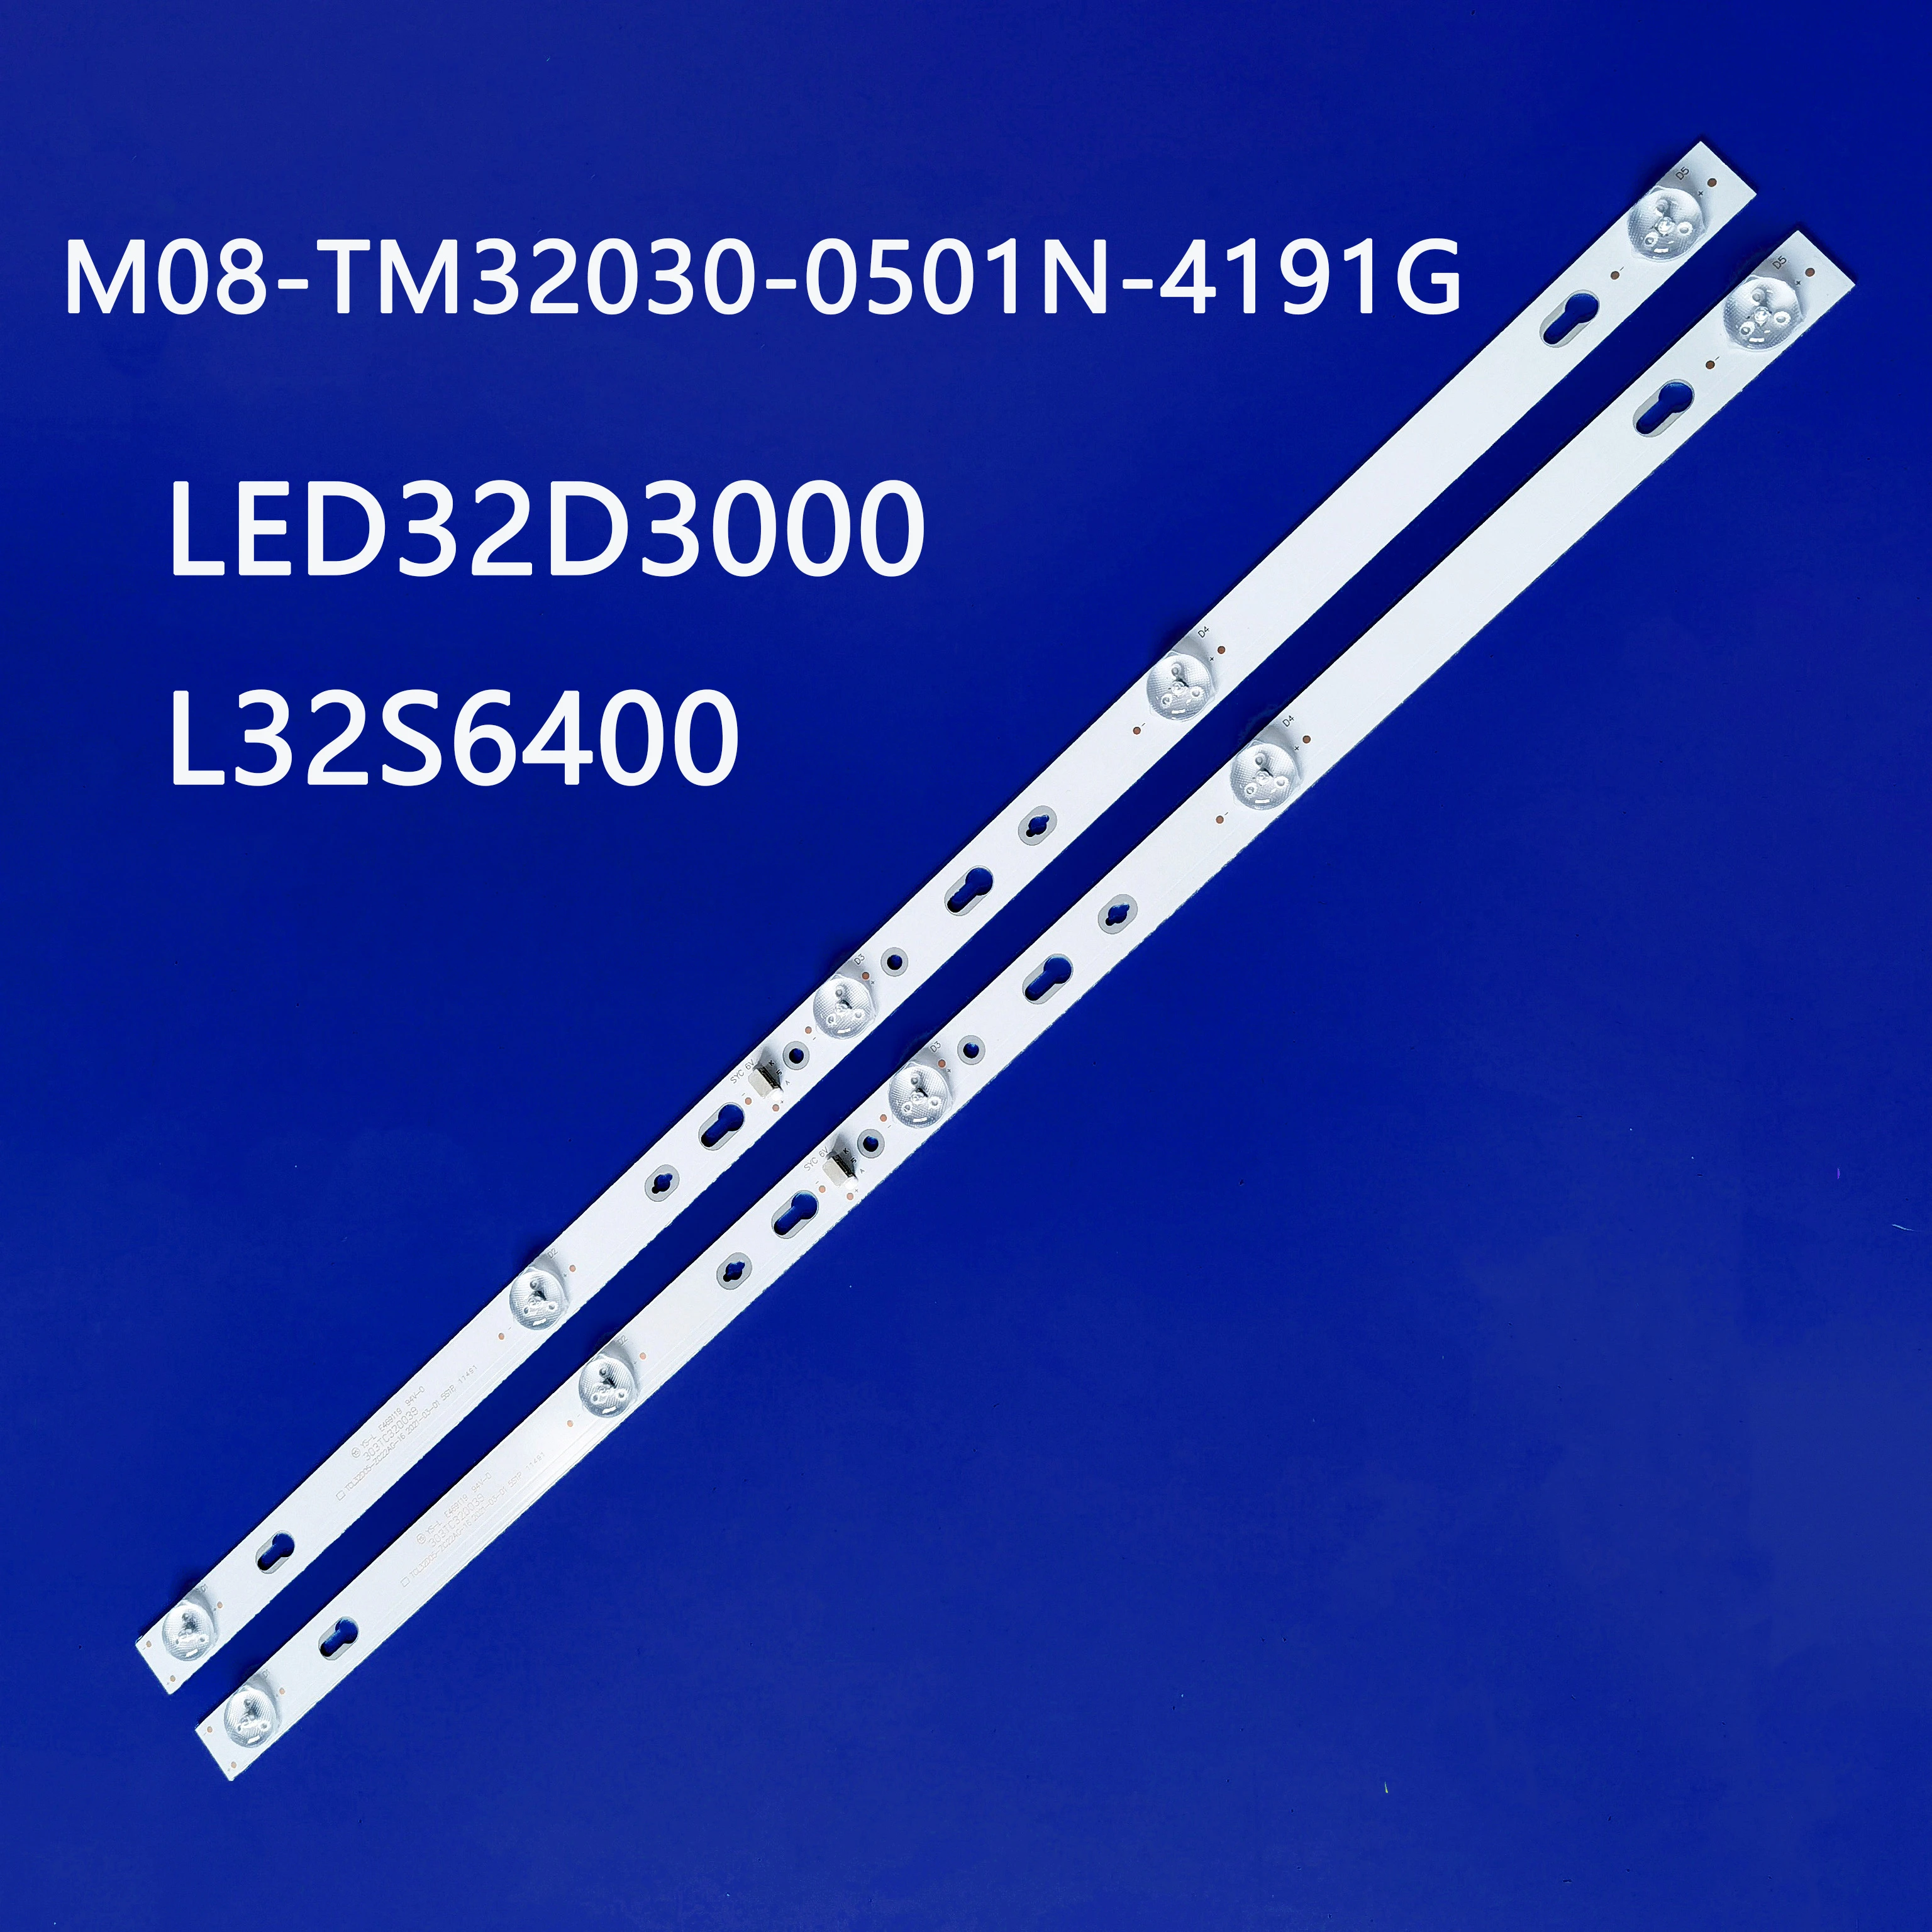 led ceiling panel New LED Strip for L32S6400 M08-TM32030-0501N-4191G LED32D3000 2x2 drop ceiling light